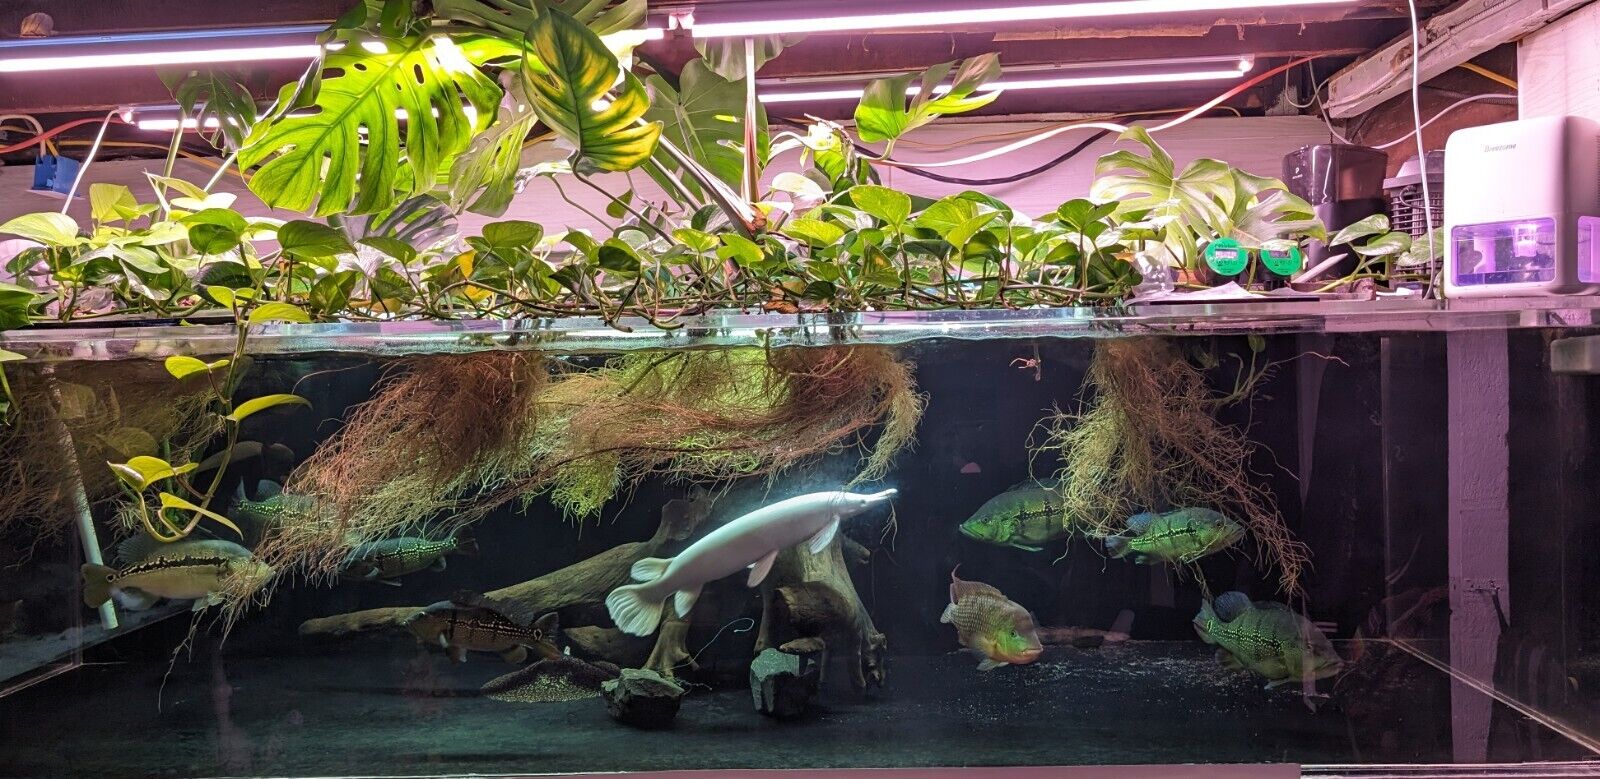 750 Gallon Acrylic Fish Tank With Steel Stand - Full Aquarium Setup